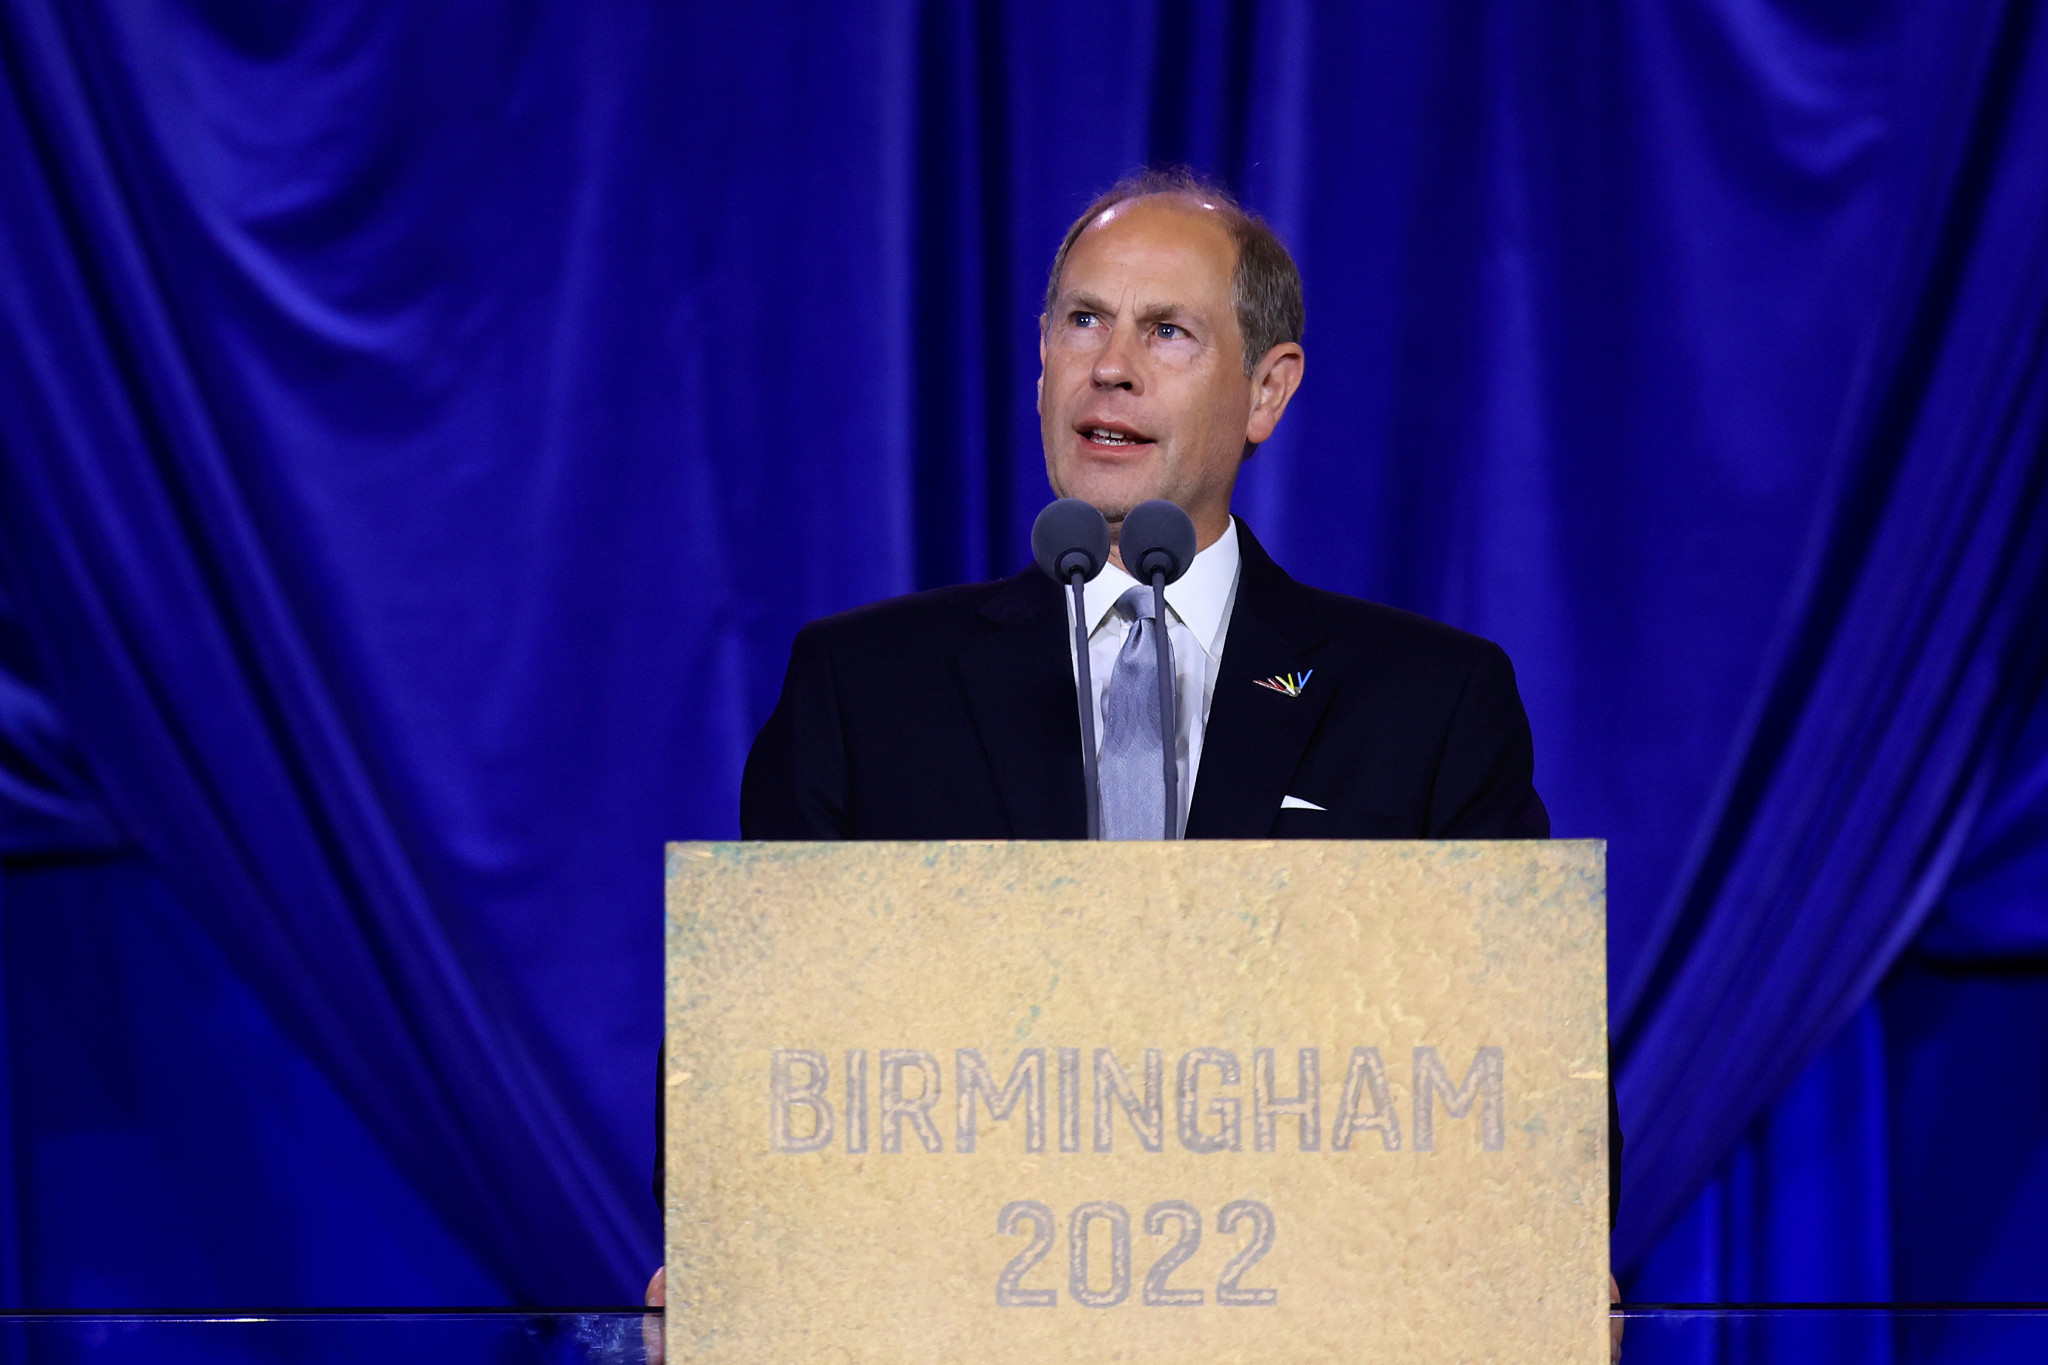 Commonwealth Games Federation Vice-Patron Prince Edward becomes Duke of Edinburgh